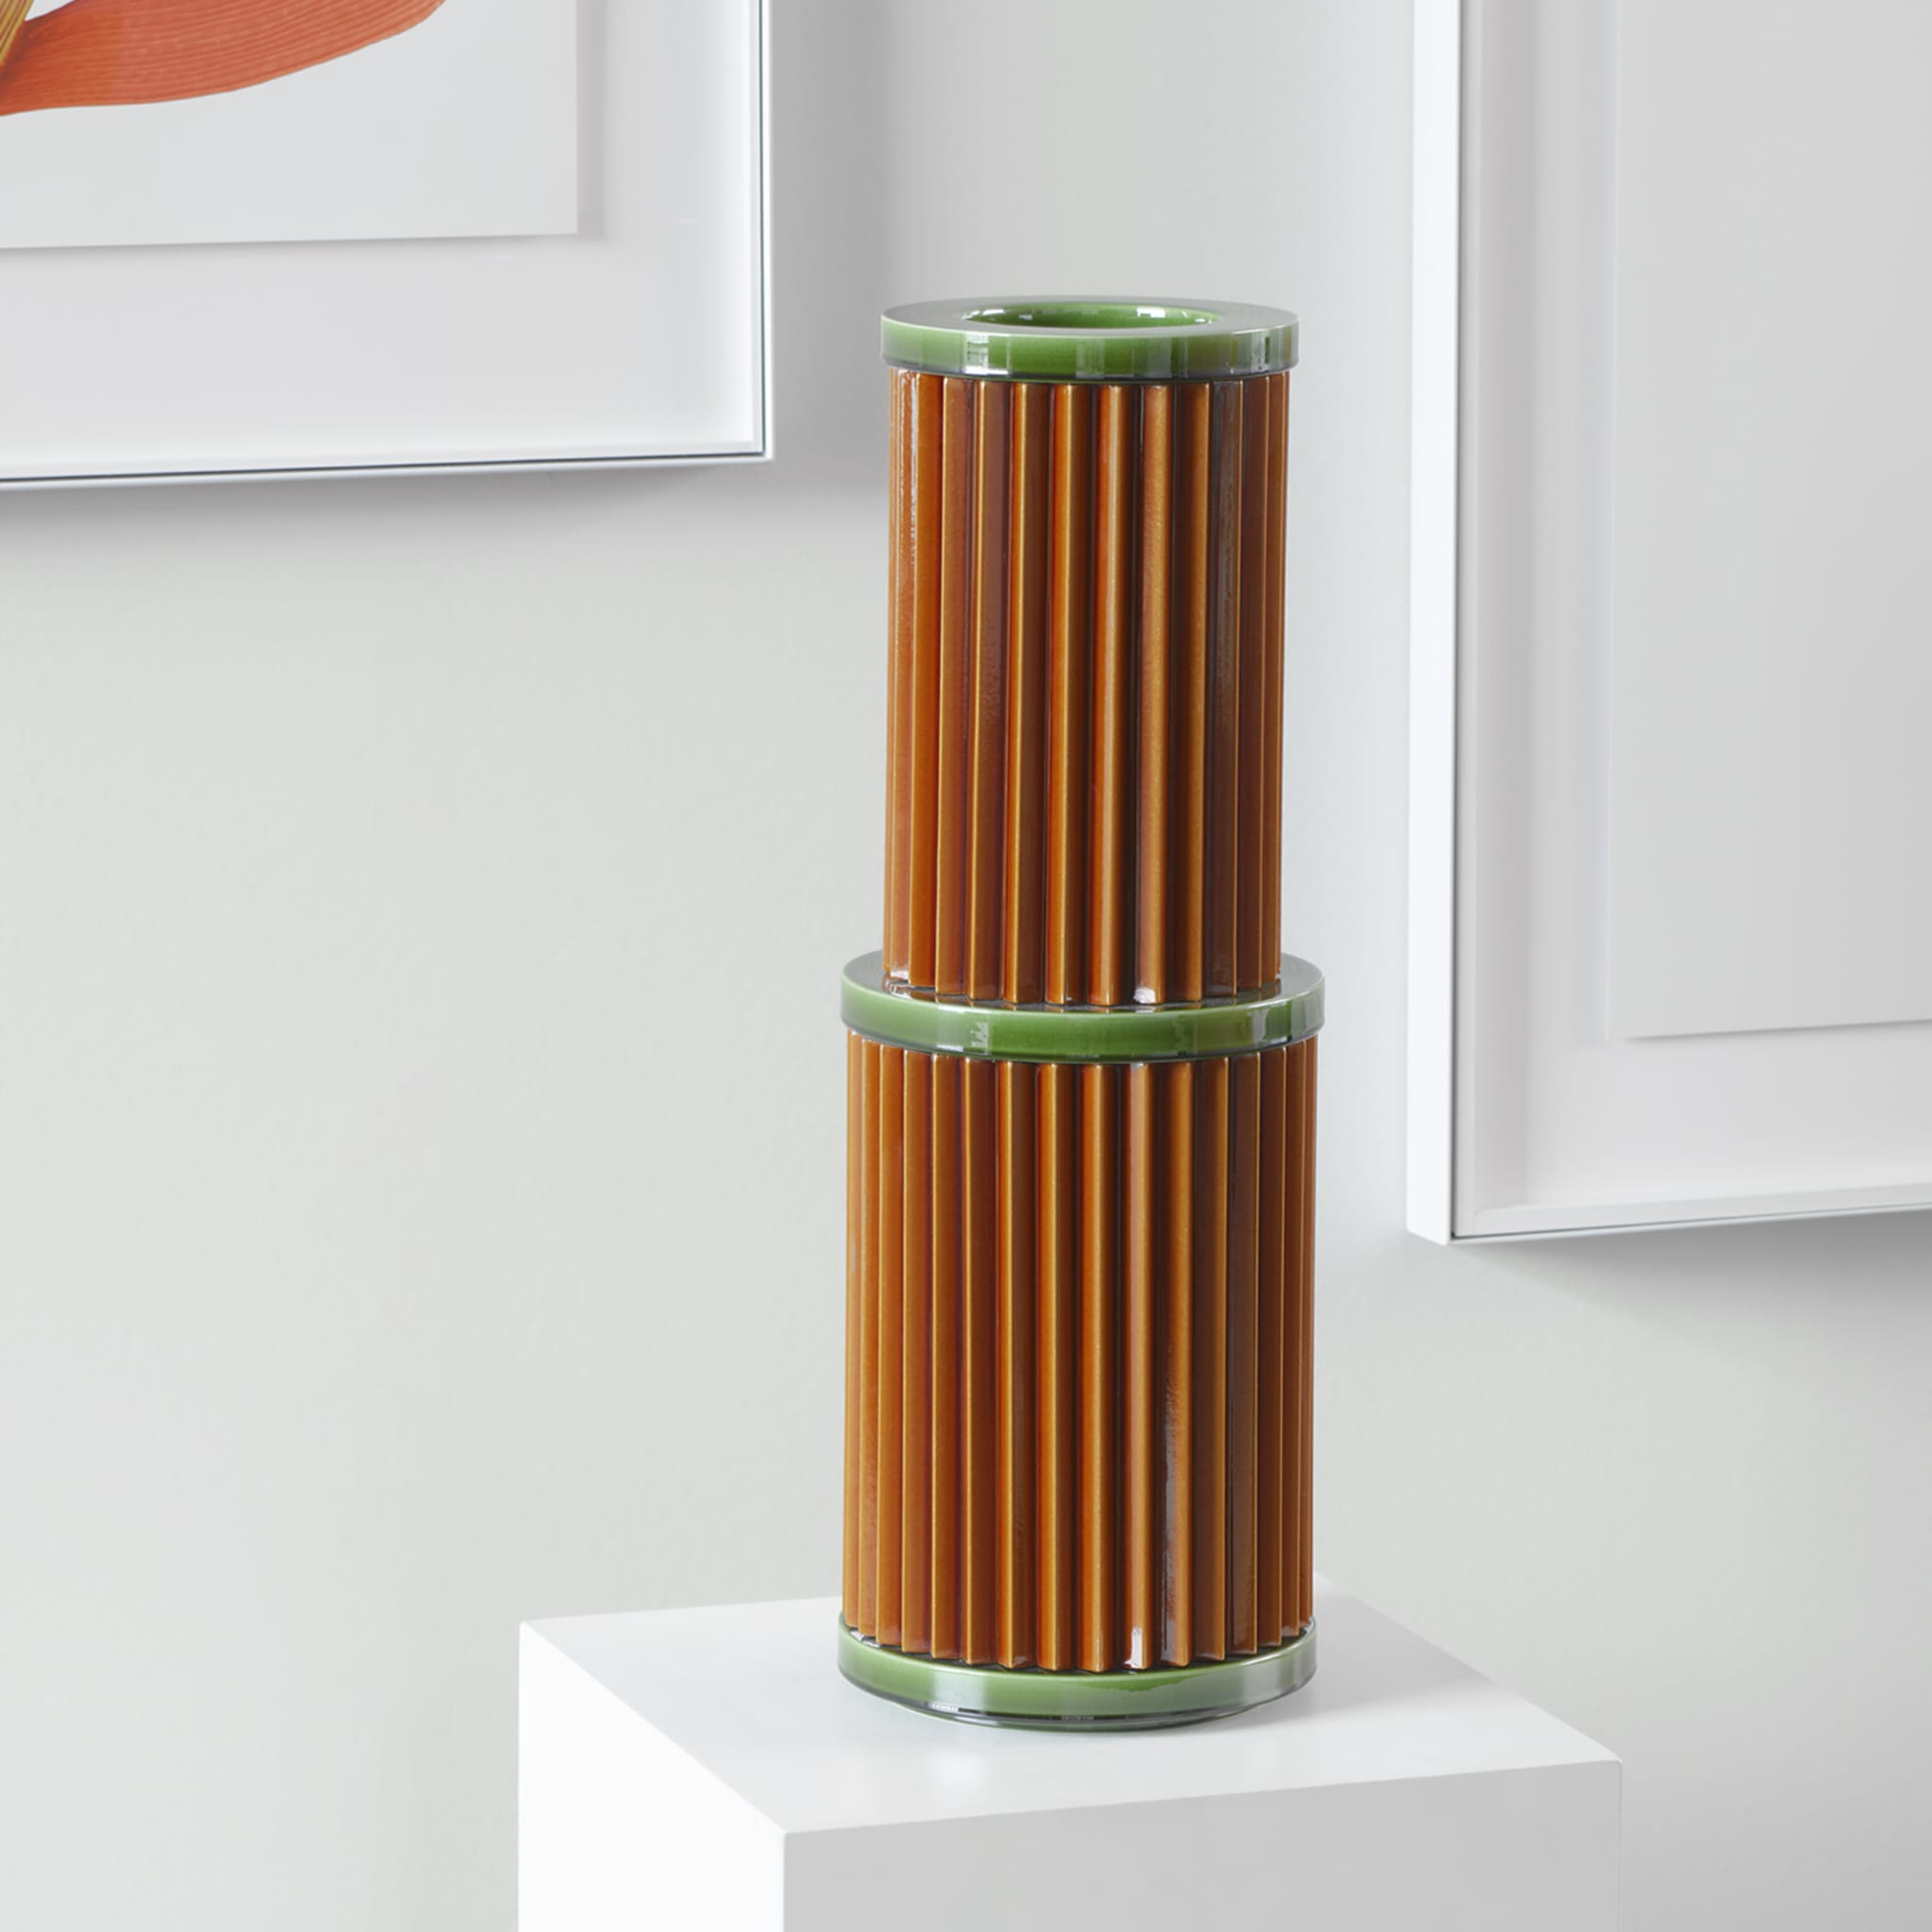 Rombini C Brown and Green Vase by Ronan & Erwan Bouroullec - Alternative view 4